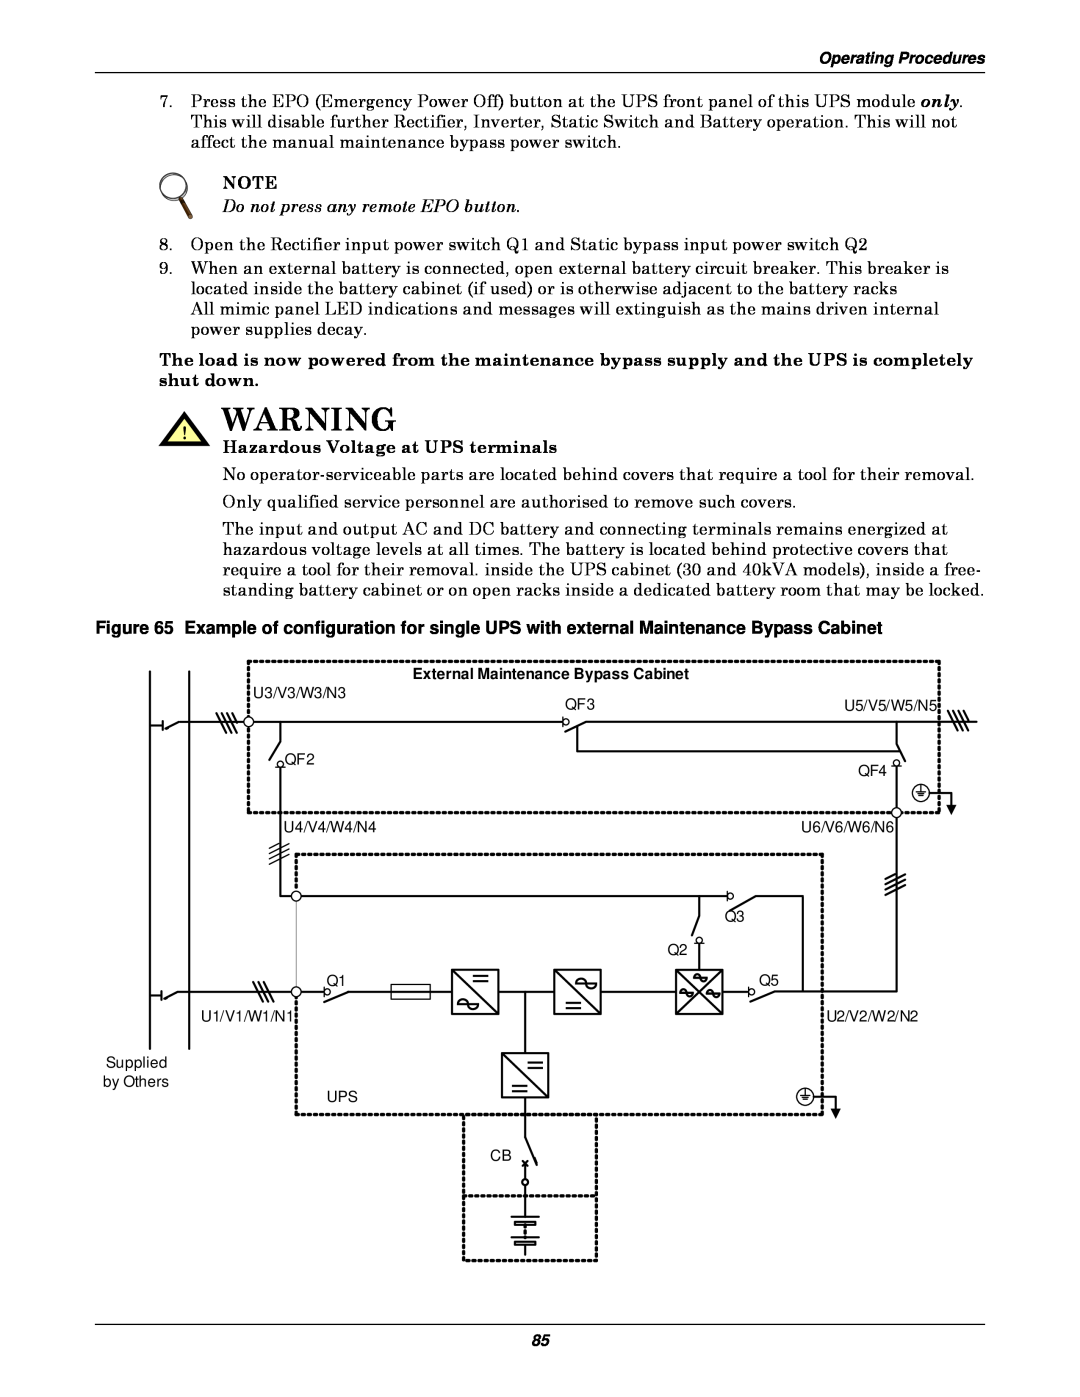 Emerson 400V, 50 and 60 Hz, 30-200kVA user manual Do not press any remote EPO button, Hazardous Voltage at UPS terminals 